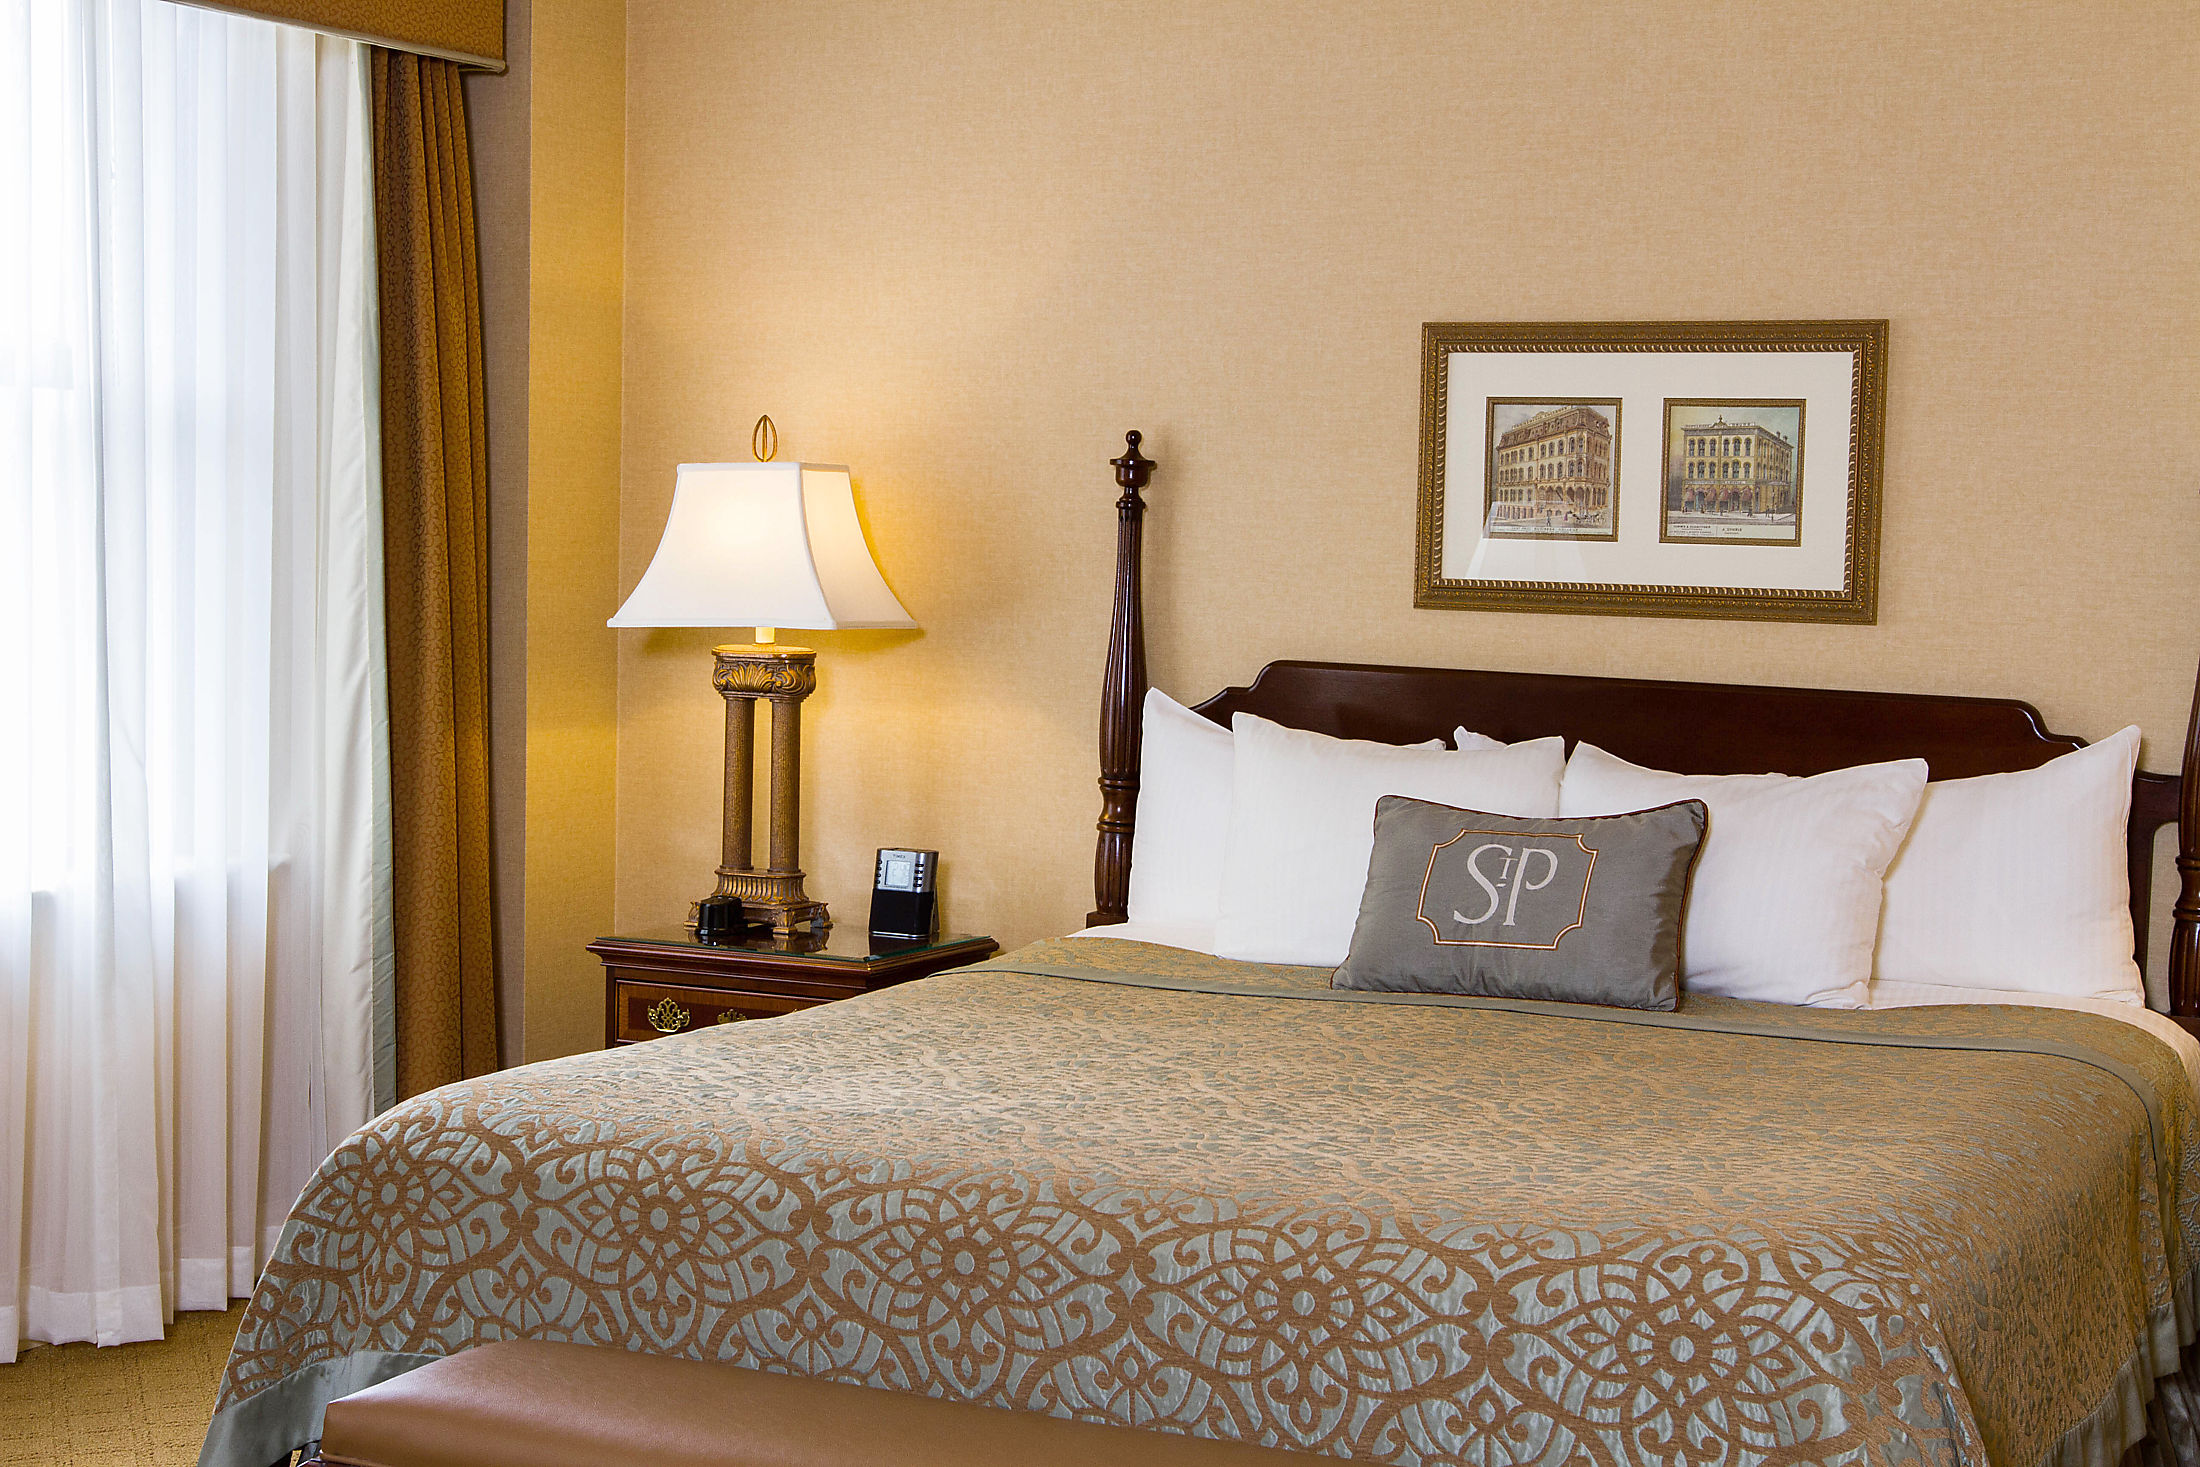 The Saint Paul Hotel: Luxury, Historic, Deluxe, Elegant, Premier Hotels  Twin Cities